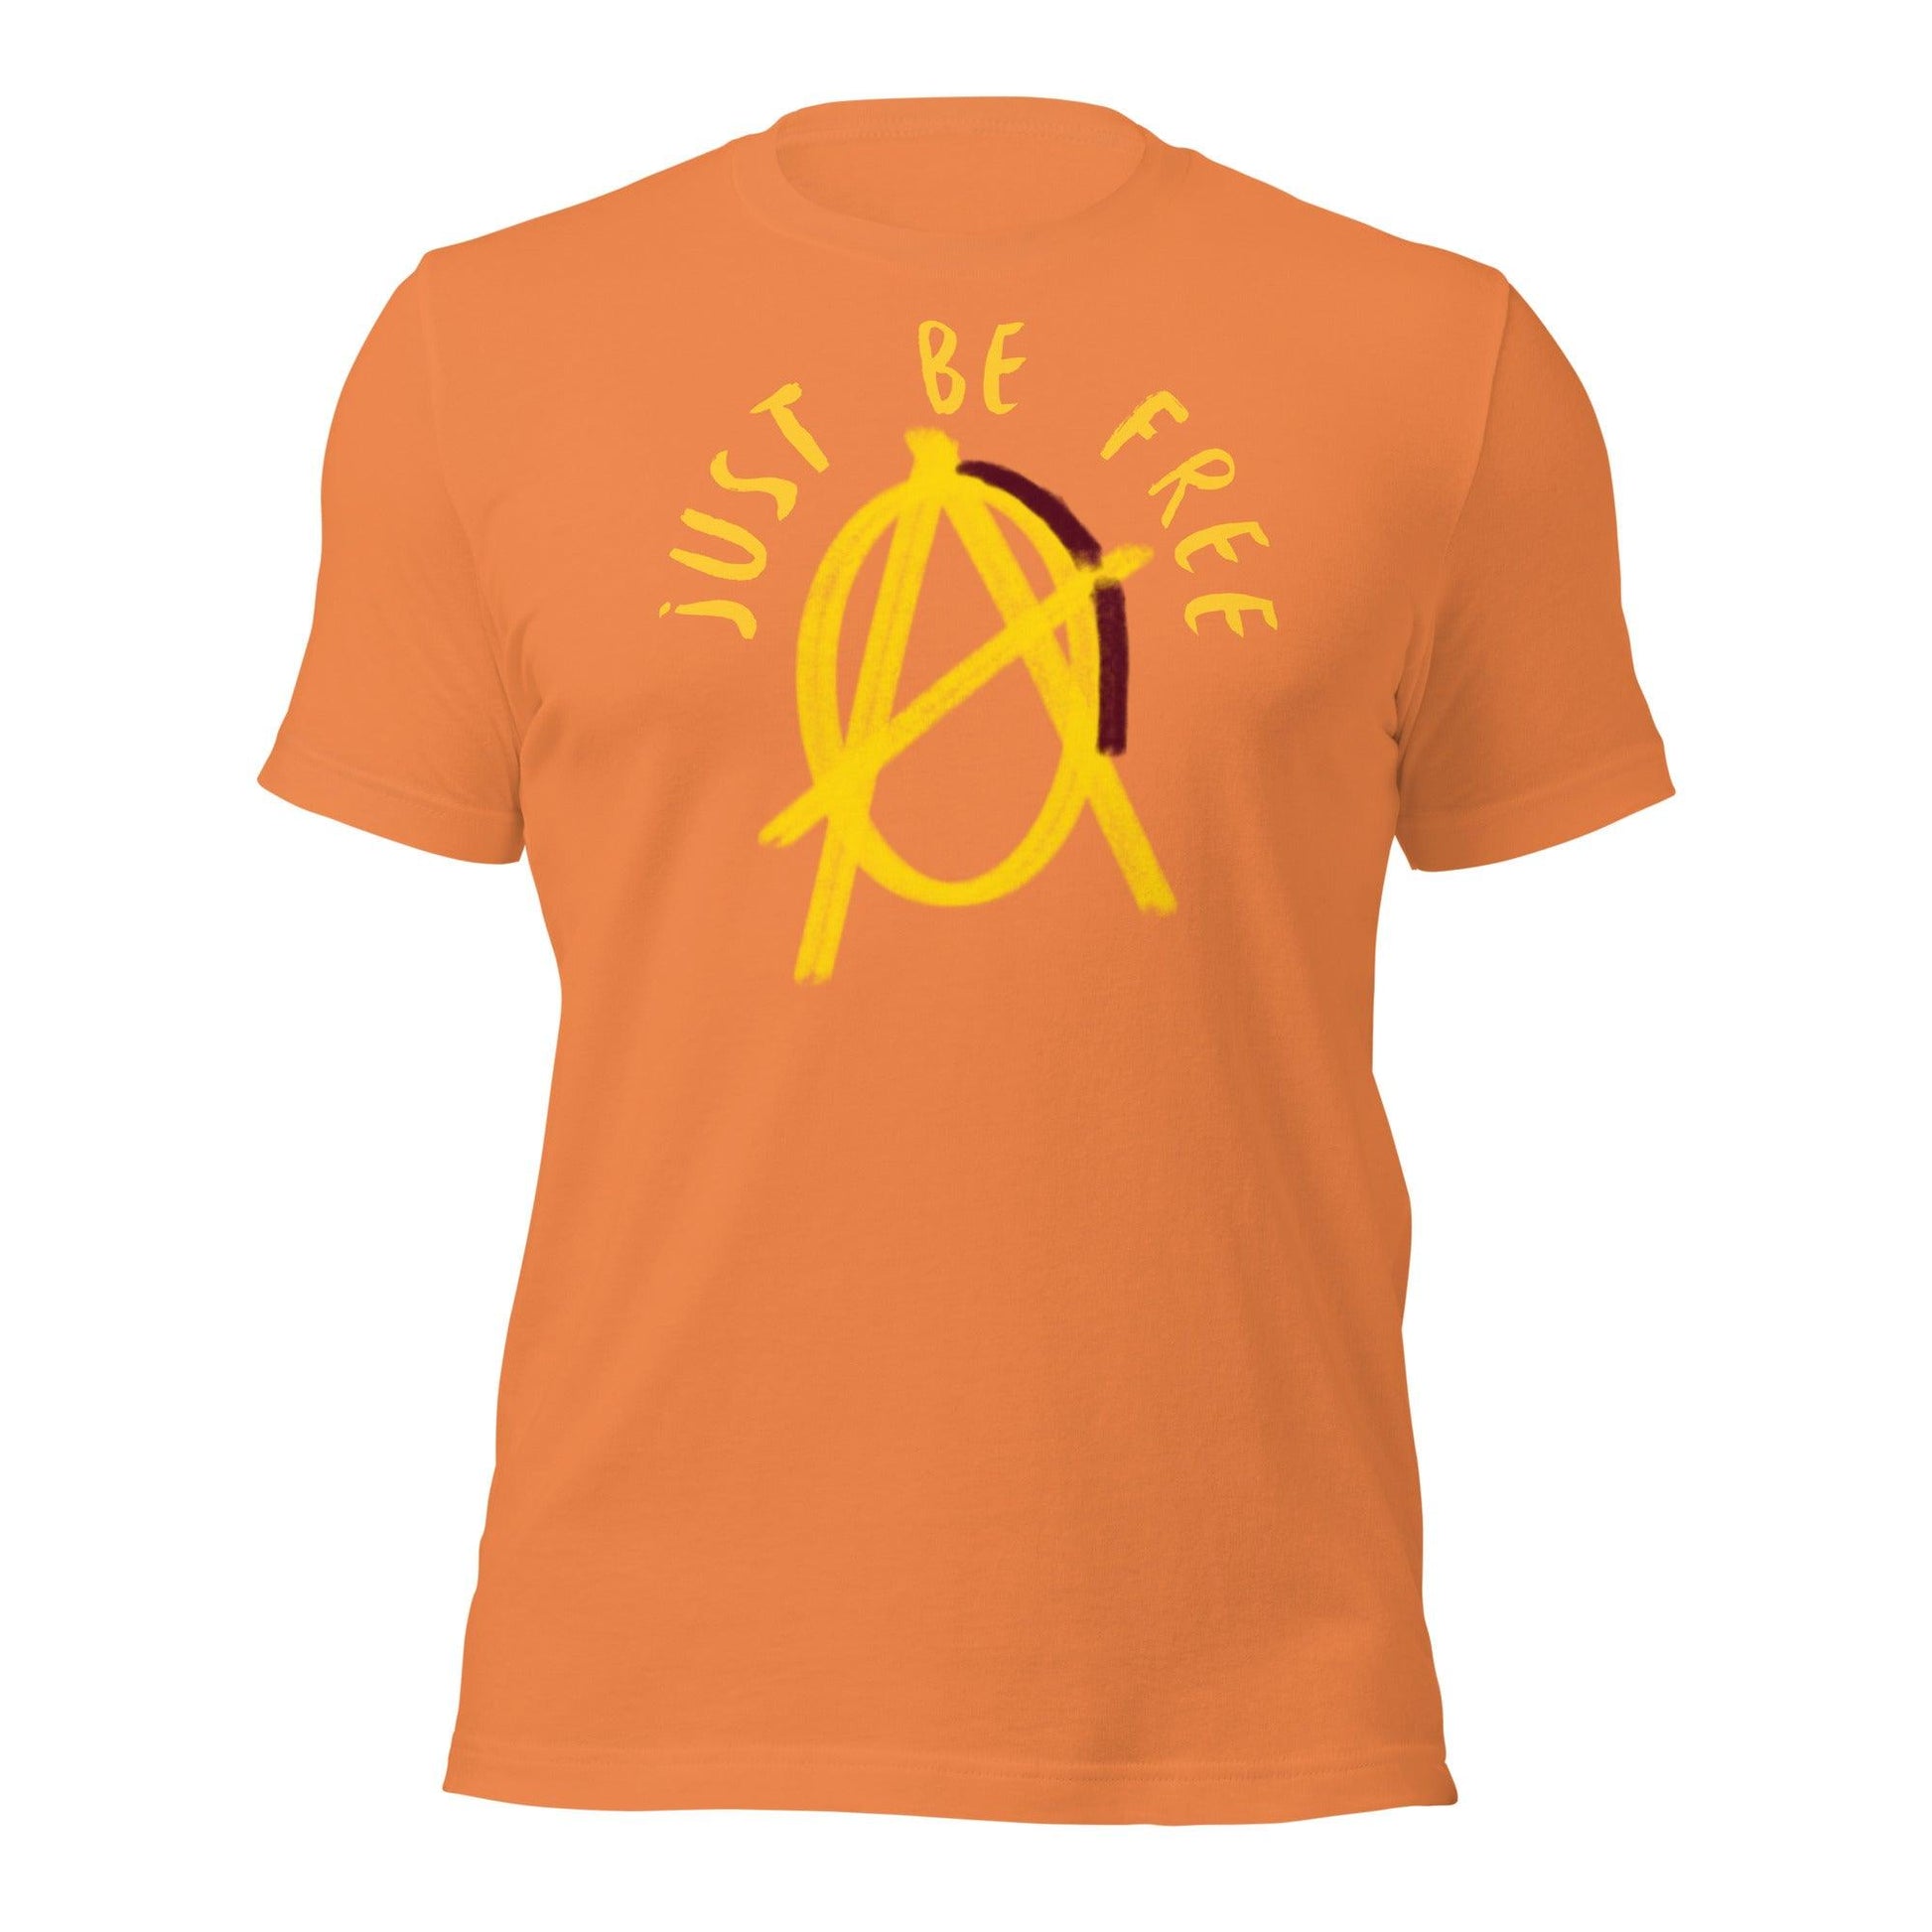 Anarchy Wear "Just Be Free" Pastels Unisex t-shirt - AnarchyWear